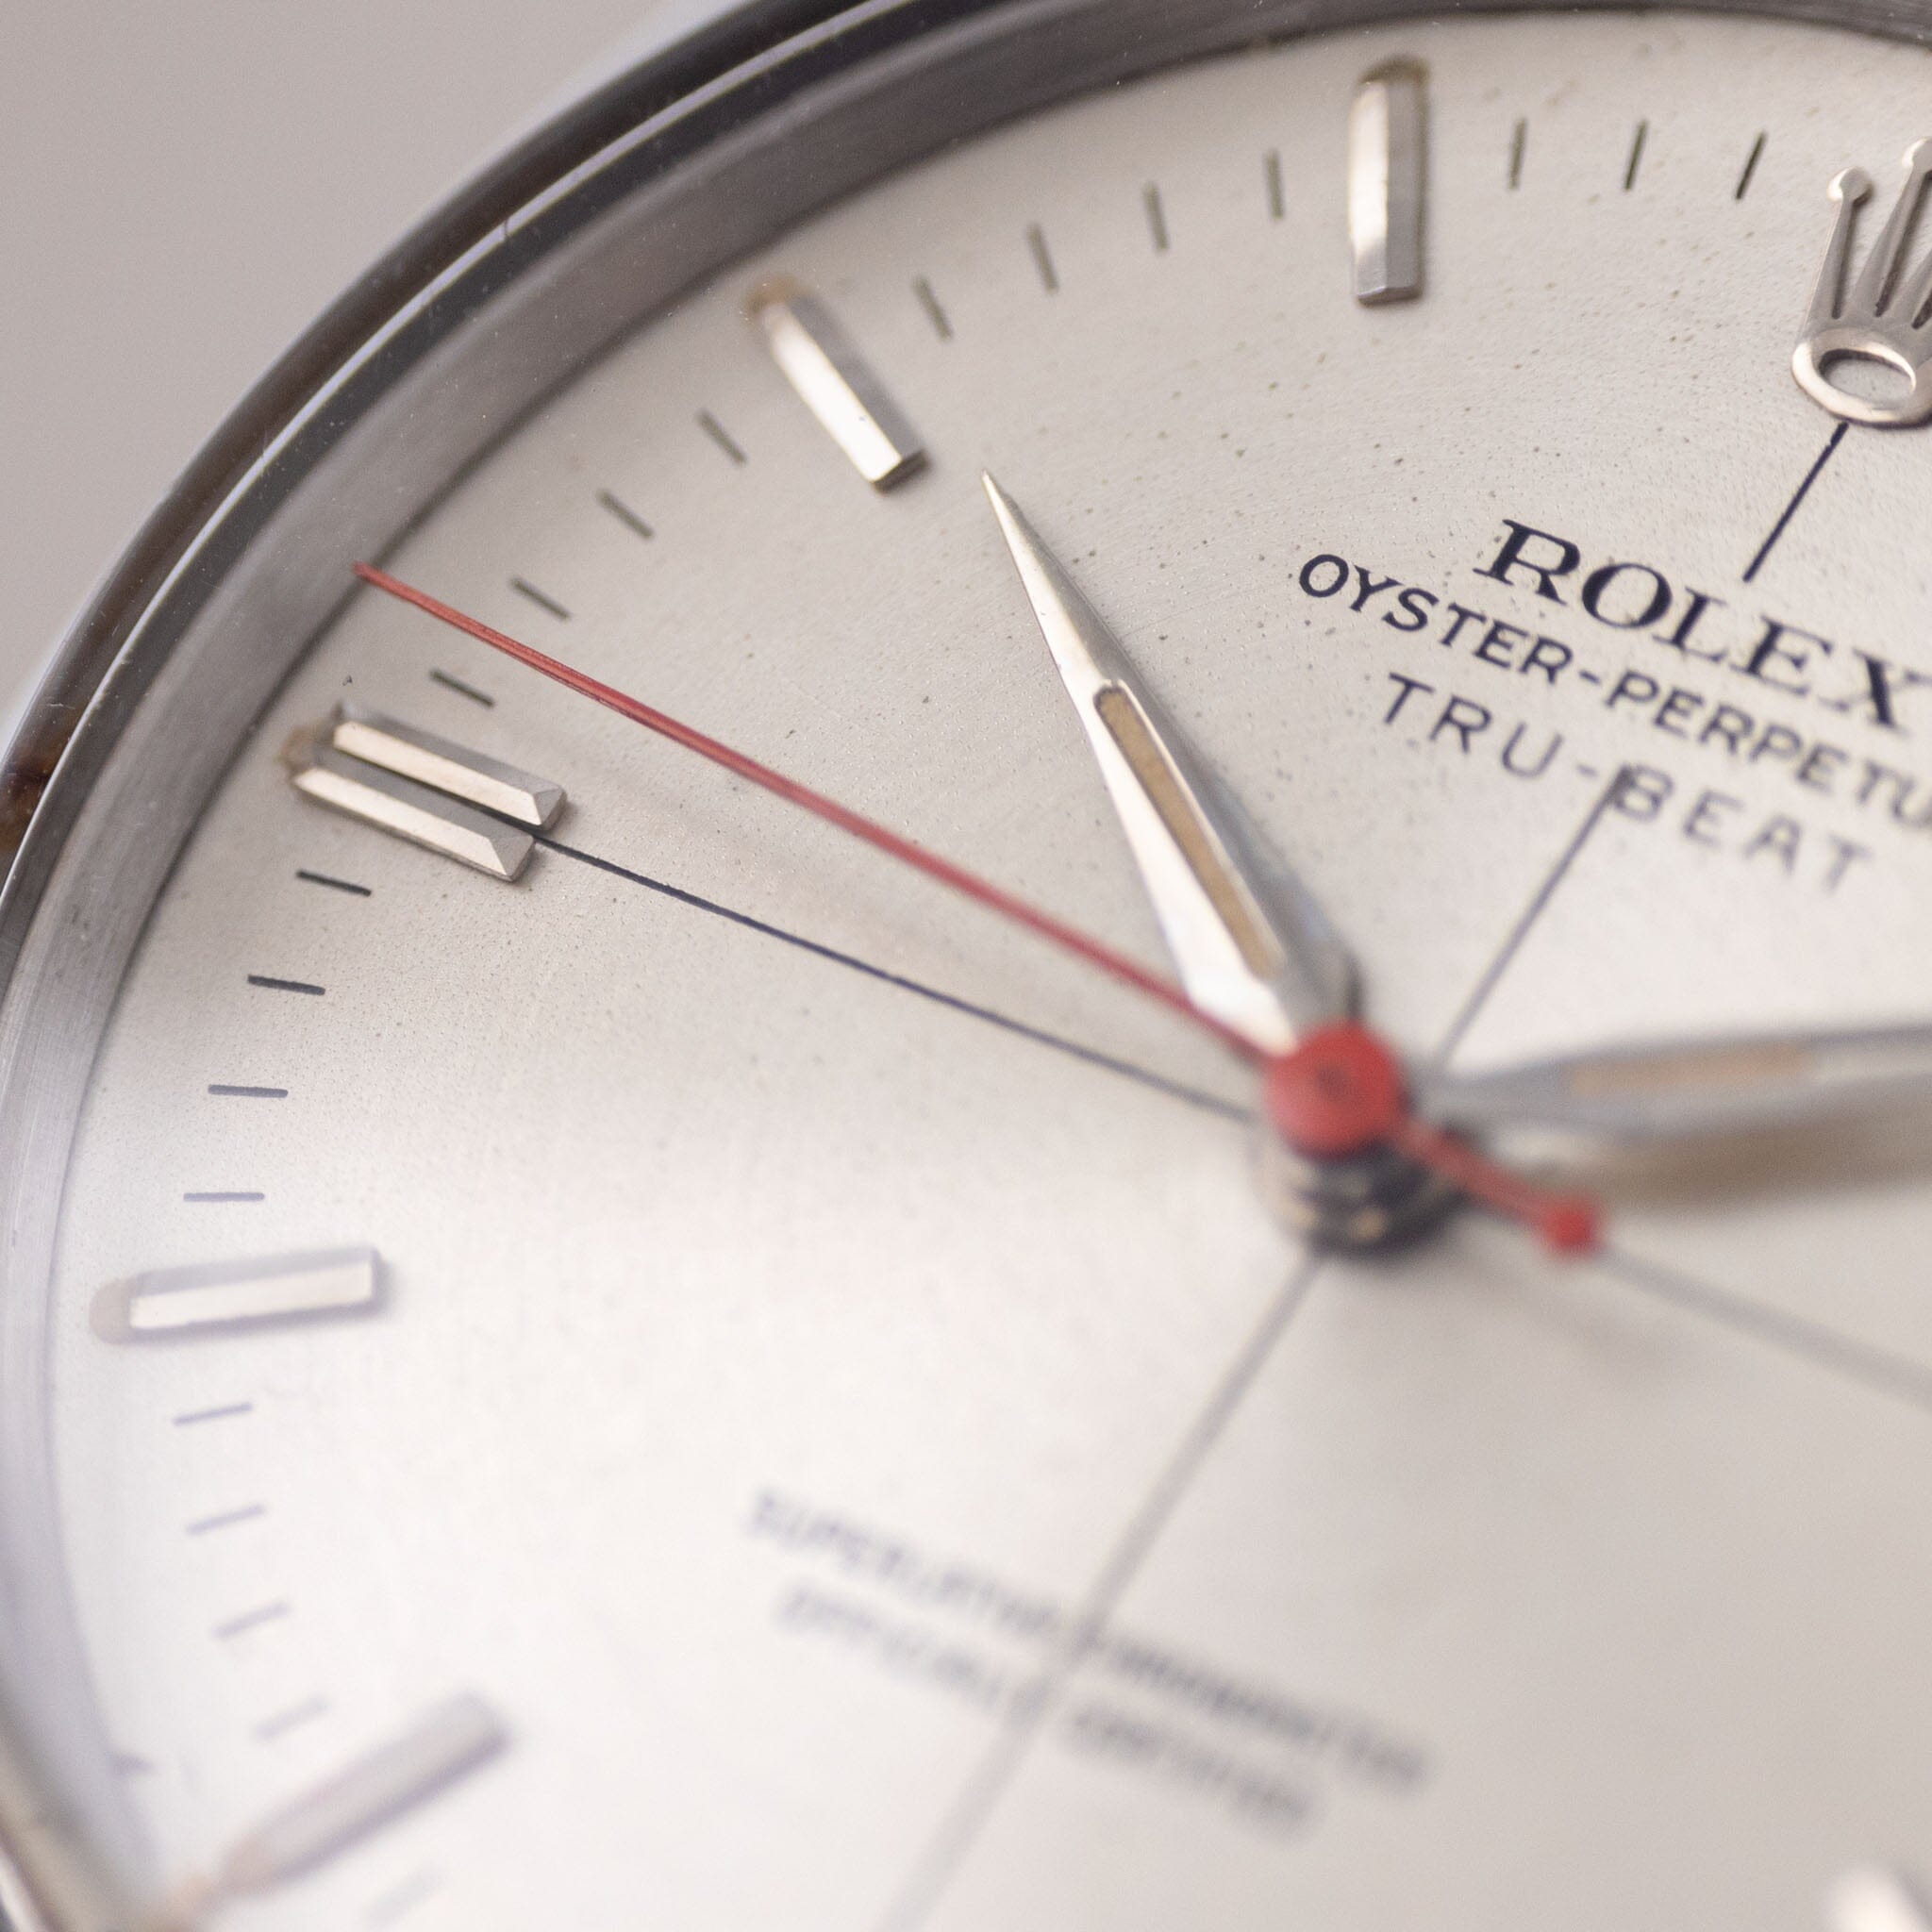 Rolex Oyster Tru-Beat 6556 Original Owner Watch